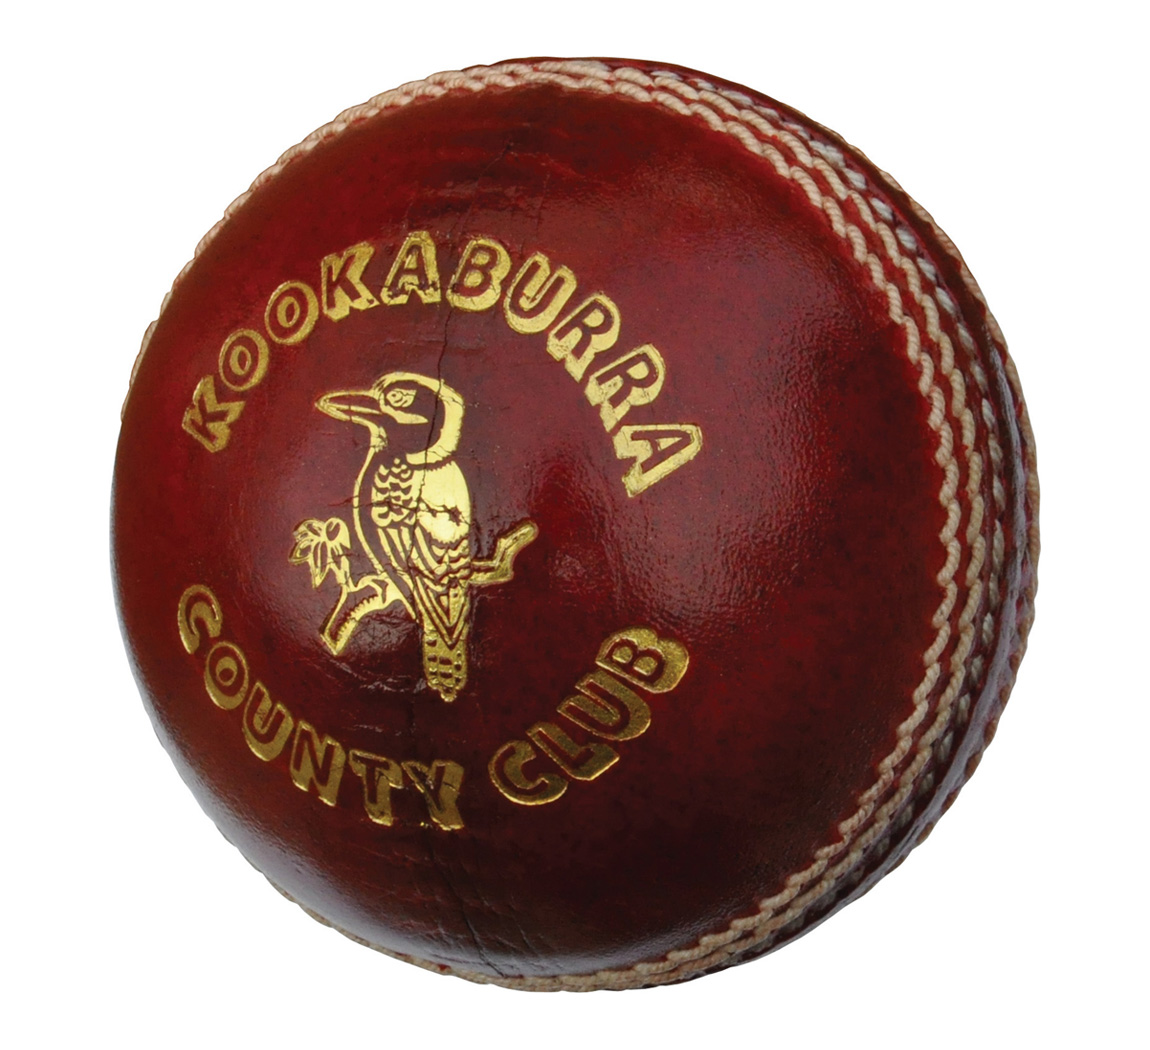 Cricket Ball Png Image #28901 - Cricket Ball, Transparent background PNG HD thumbnail